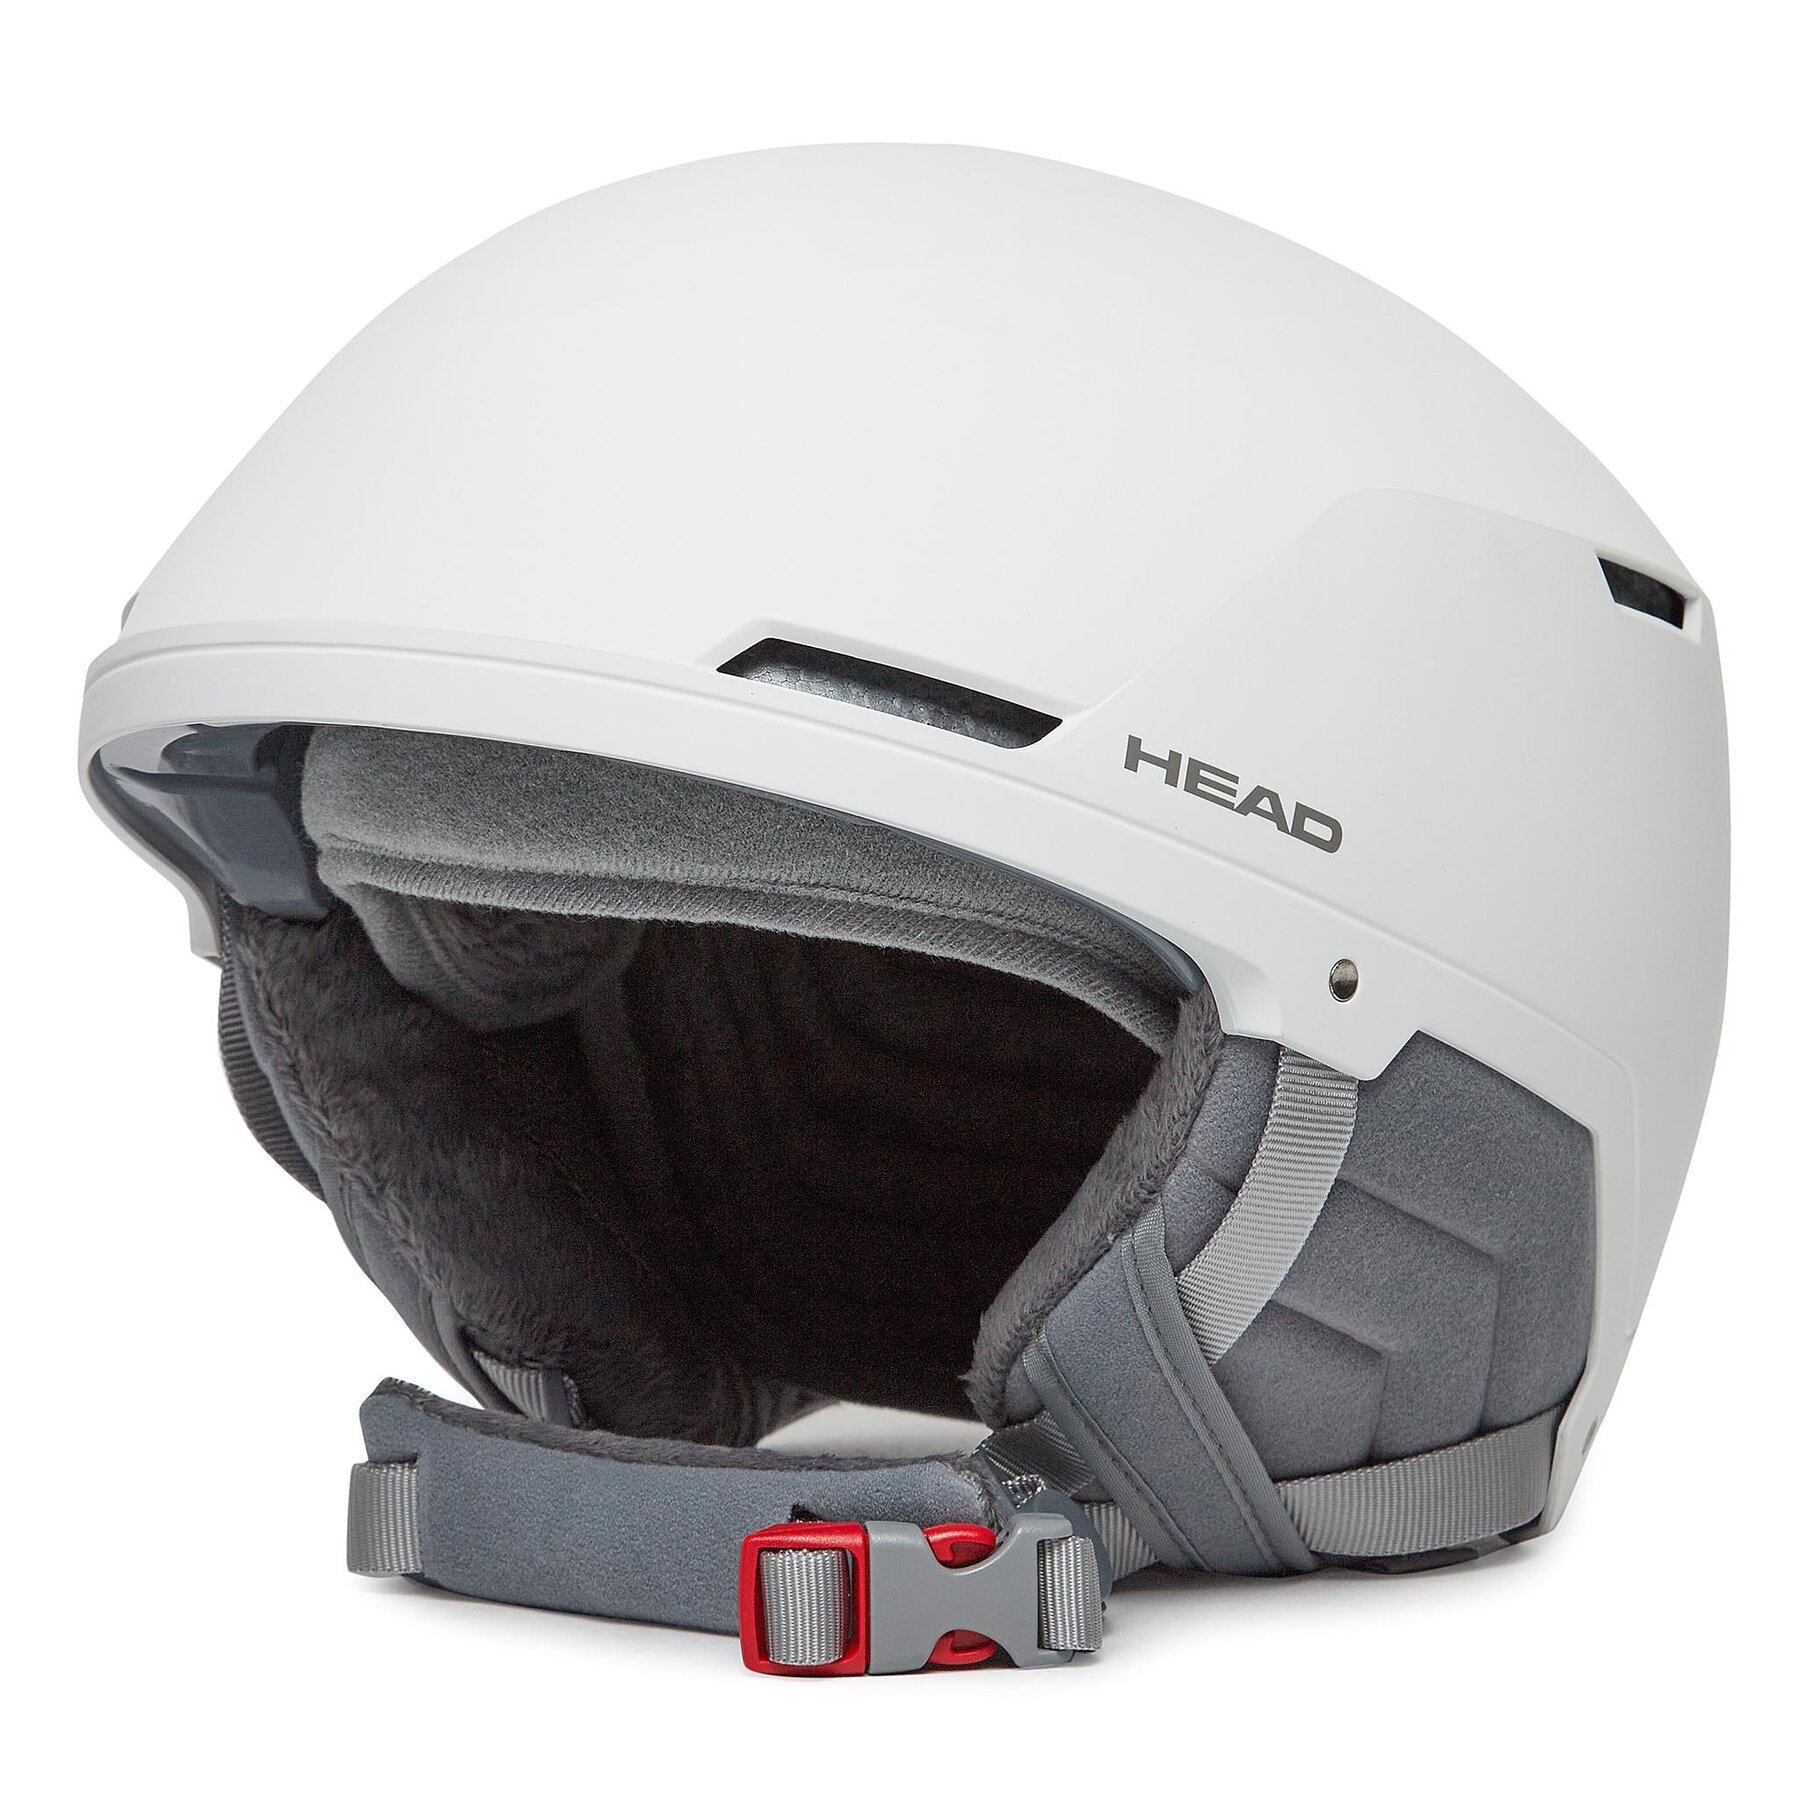 Head Compact Evo Woman Helmet White - Cascos de esquí